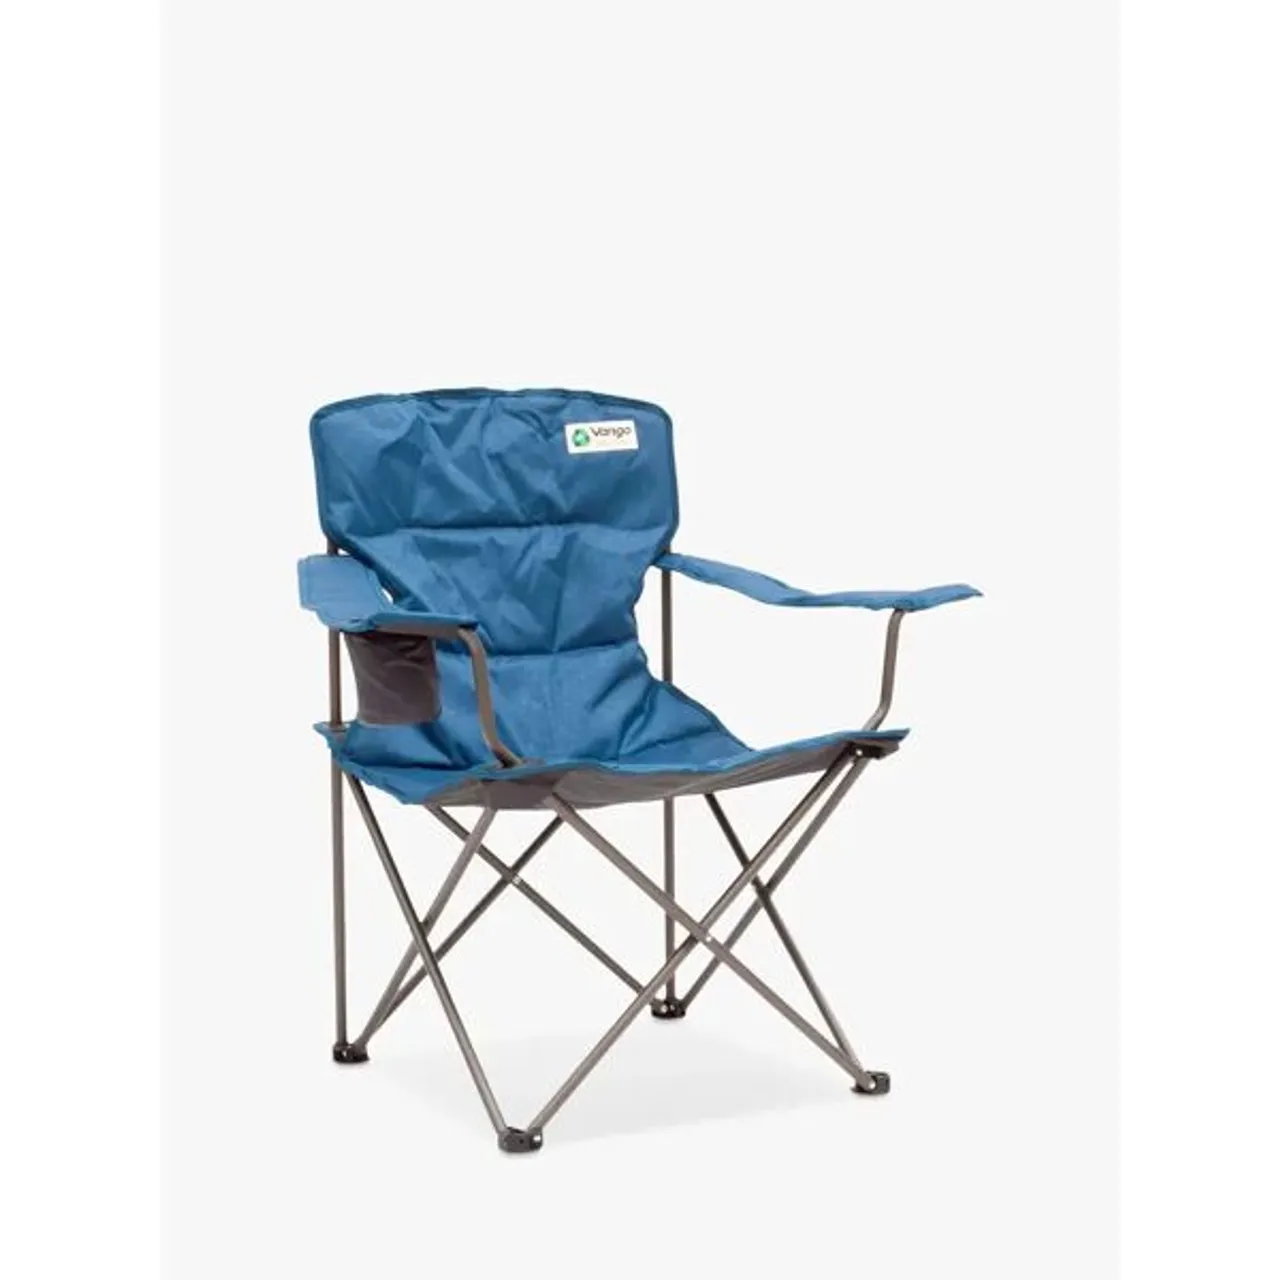 Vango Osiris Camping Chair, Moroccan Blue - Moroccan Blue - Unisex